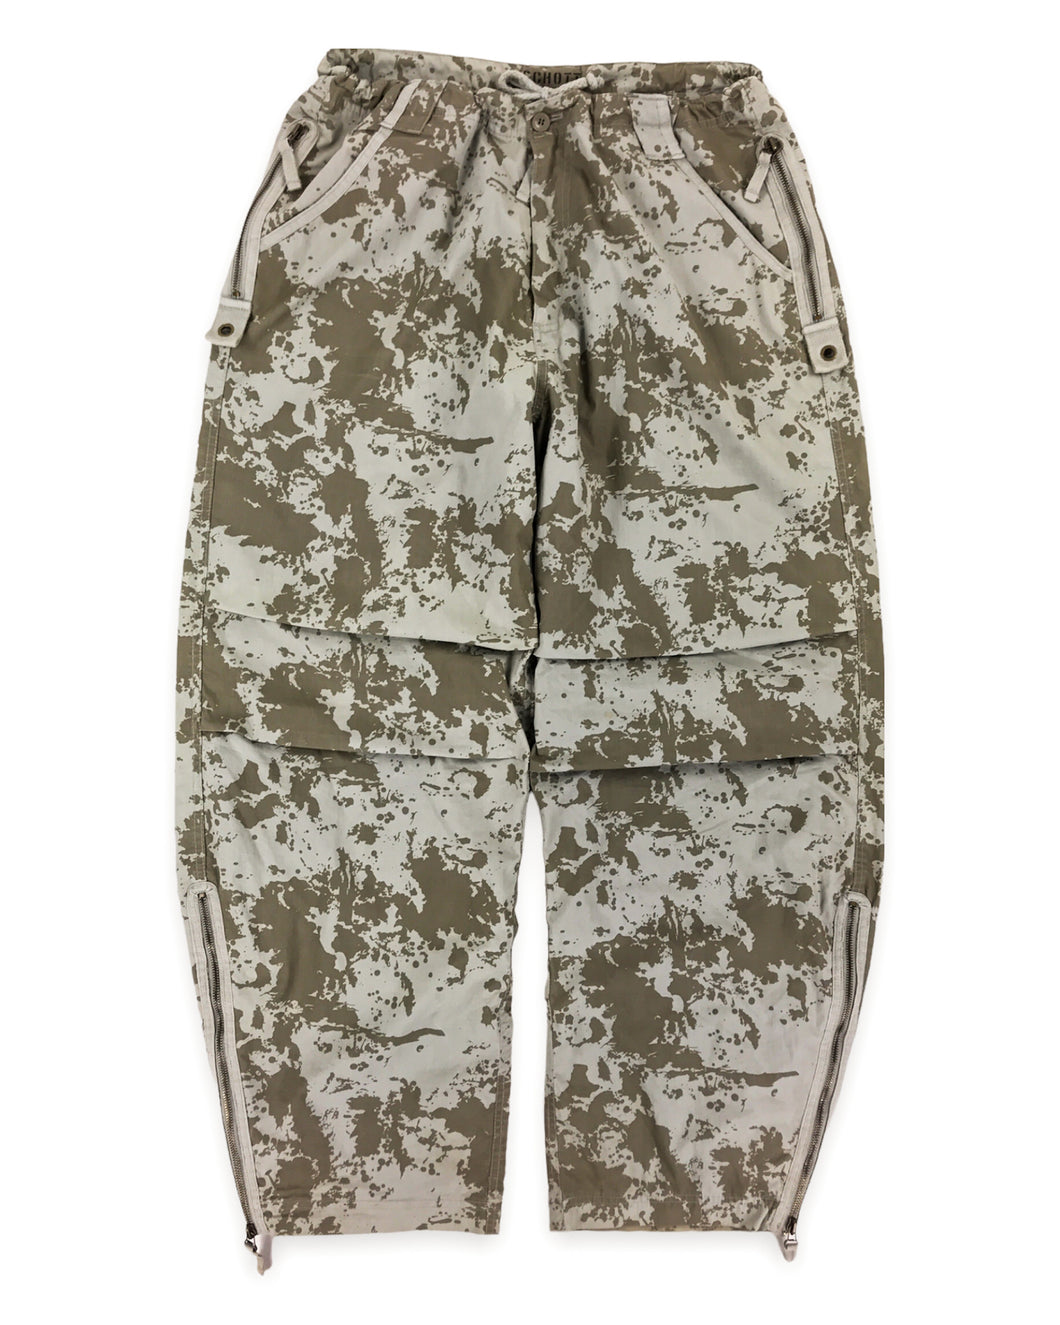 SCHOTT Camouflage Overpants (Early 2000’s)